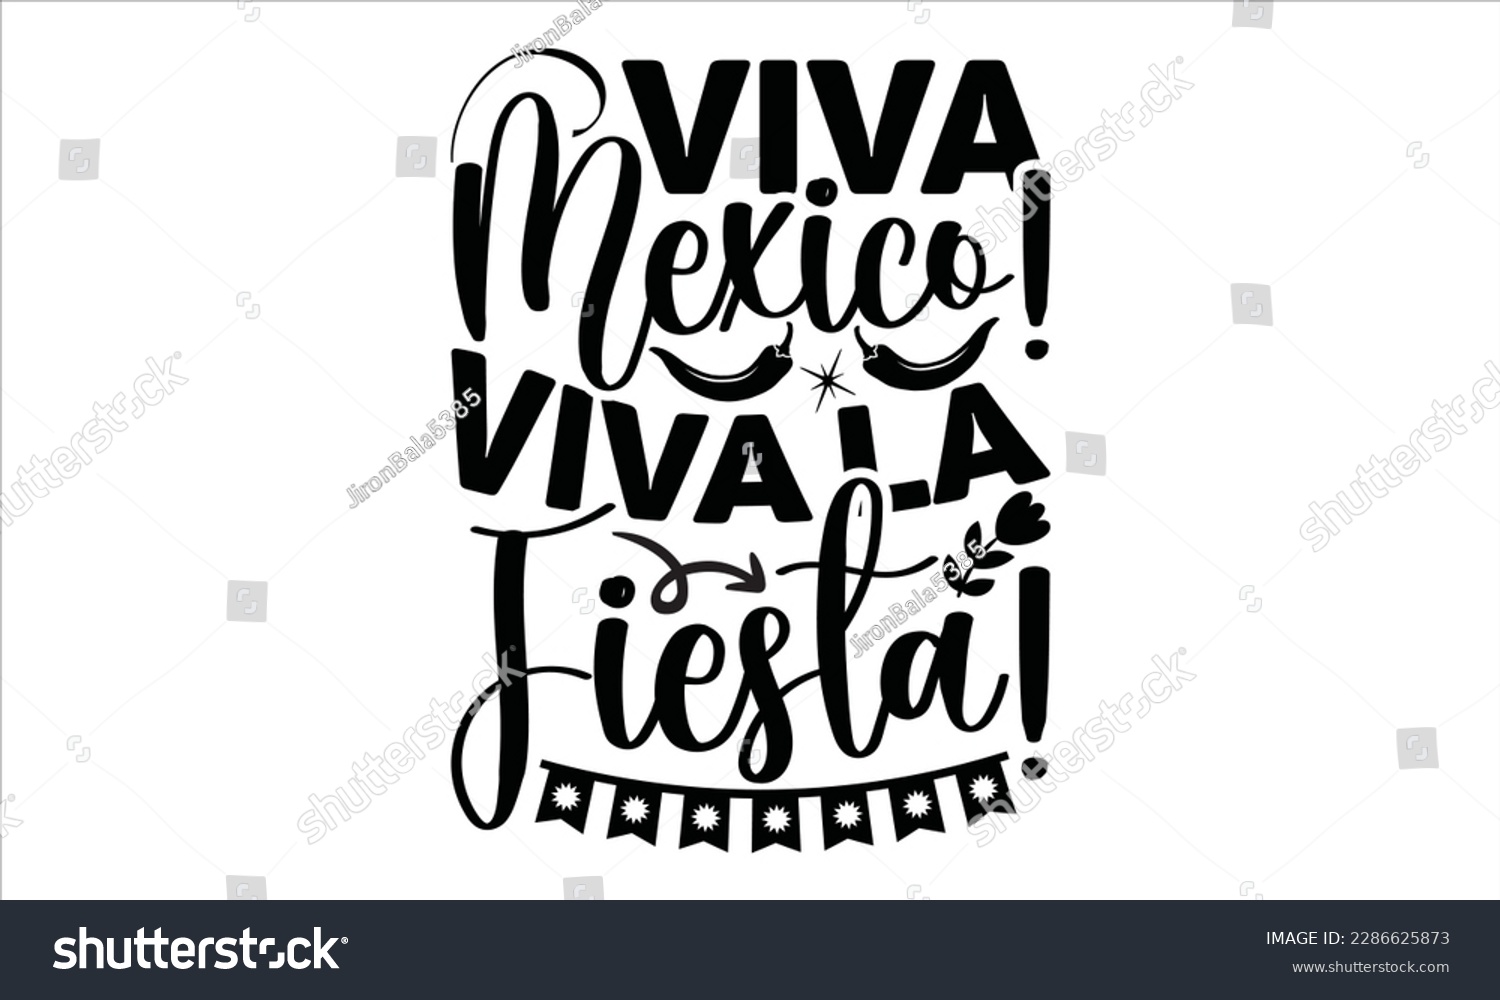 SVG of  Viva Mexico! Viva La Fiesta! - Cinco De Mayo SVG Design, Vector illustration, Illustration for prints on t-shirts, bags, posters, cards and Mug.
 svg